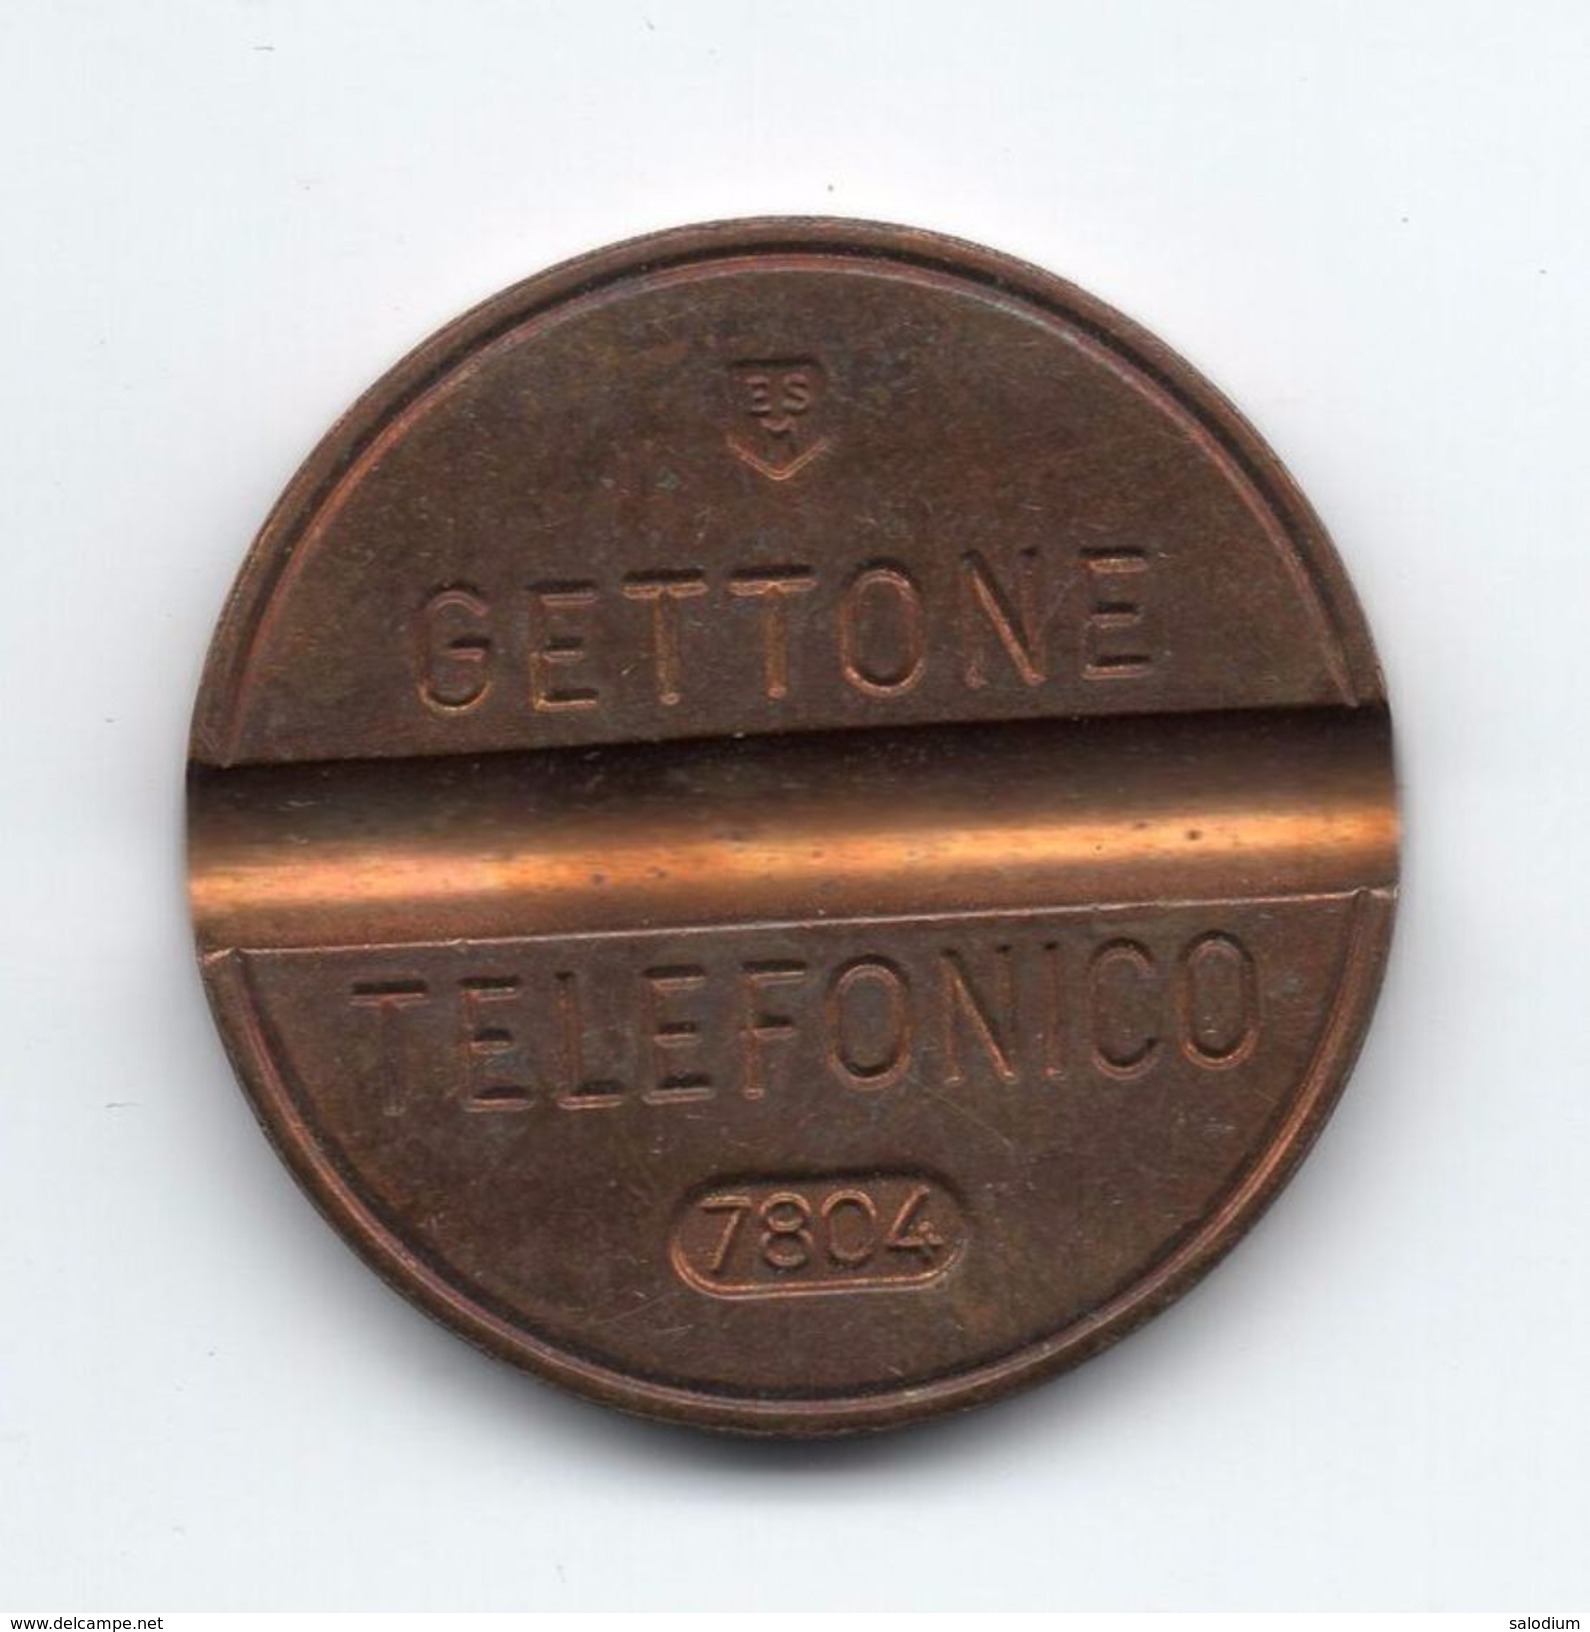 Gettone Telefonico 7804 Token Telephone - (Id-769) - Firma's